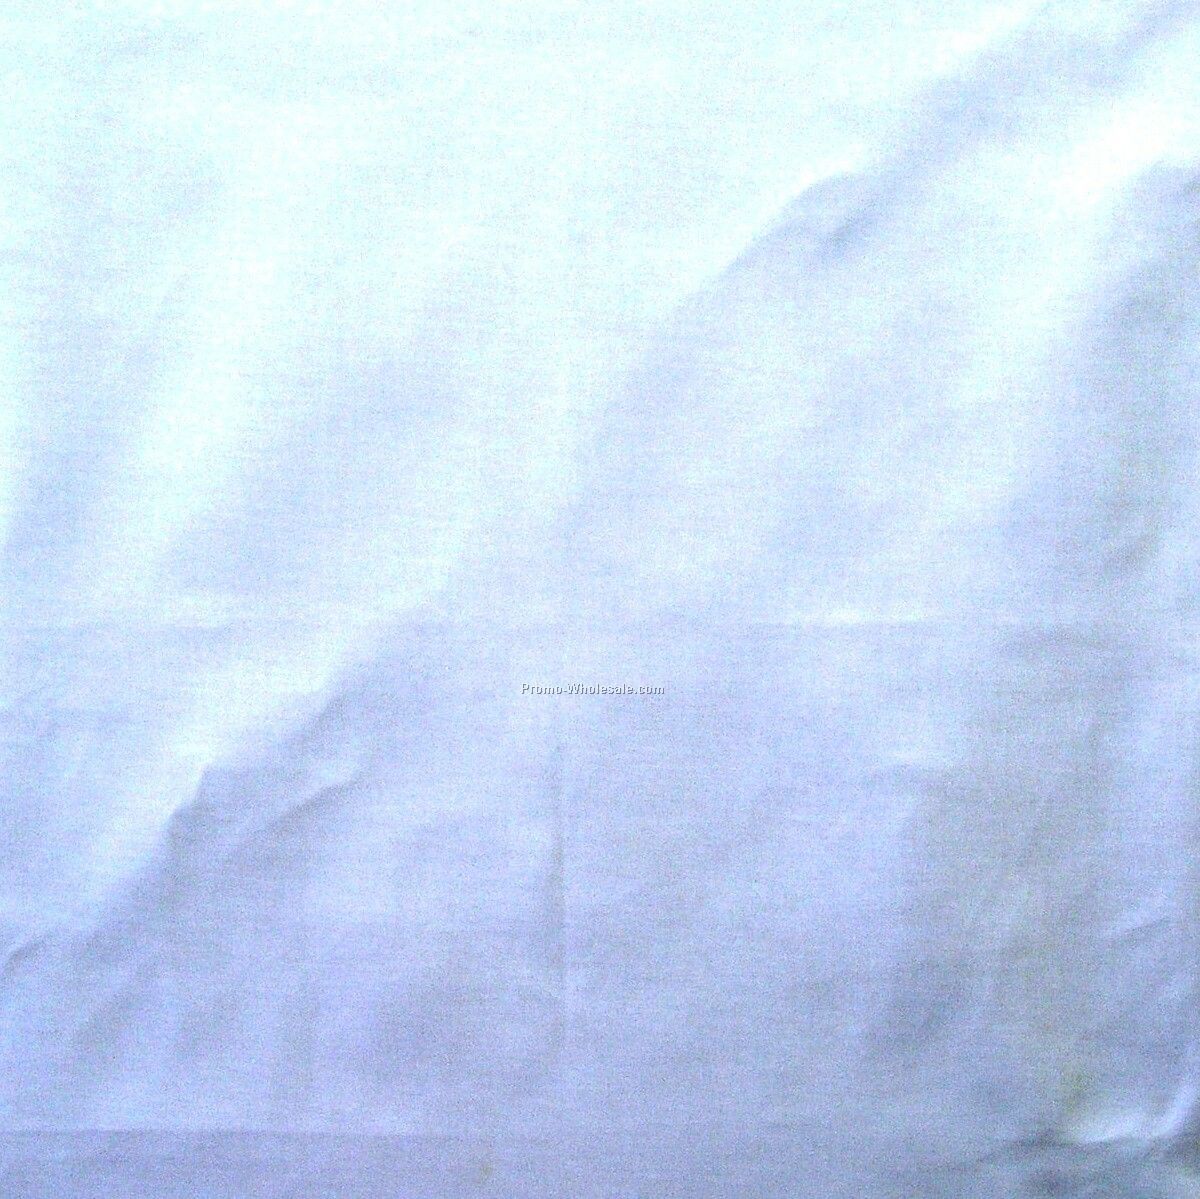 14"x14" Blank Solid Light Blue Imported 100% Cotton Handkerchiefs